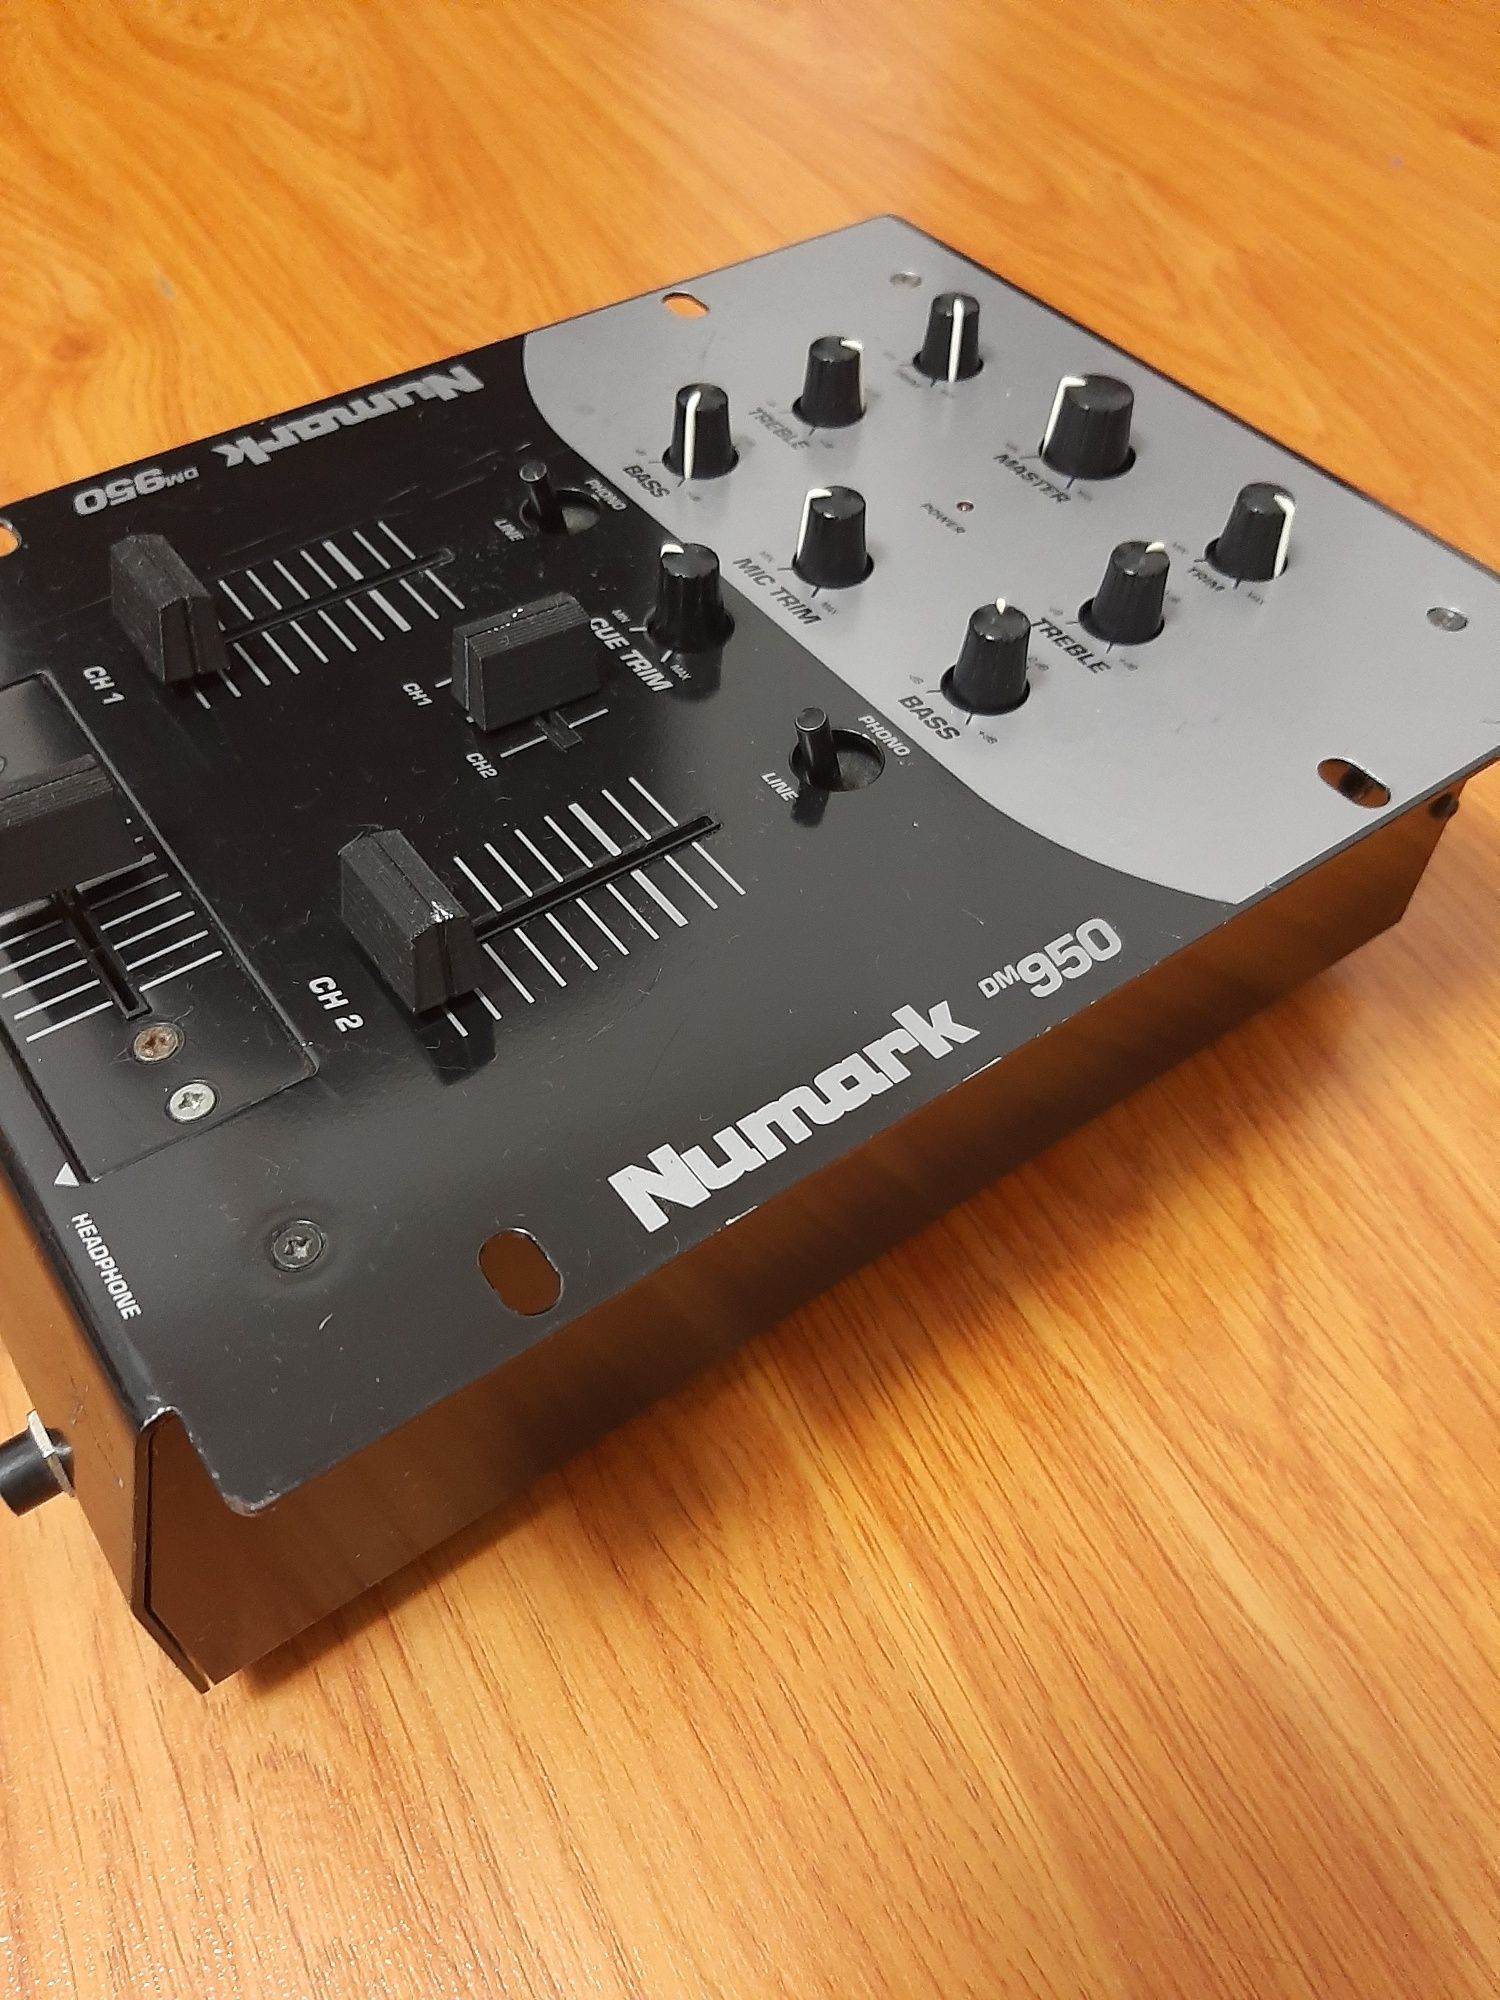 Mixer Numark DM 950